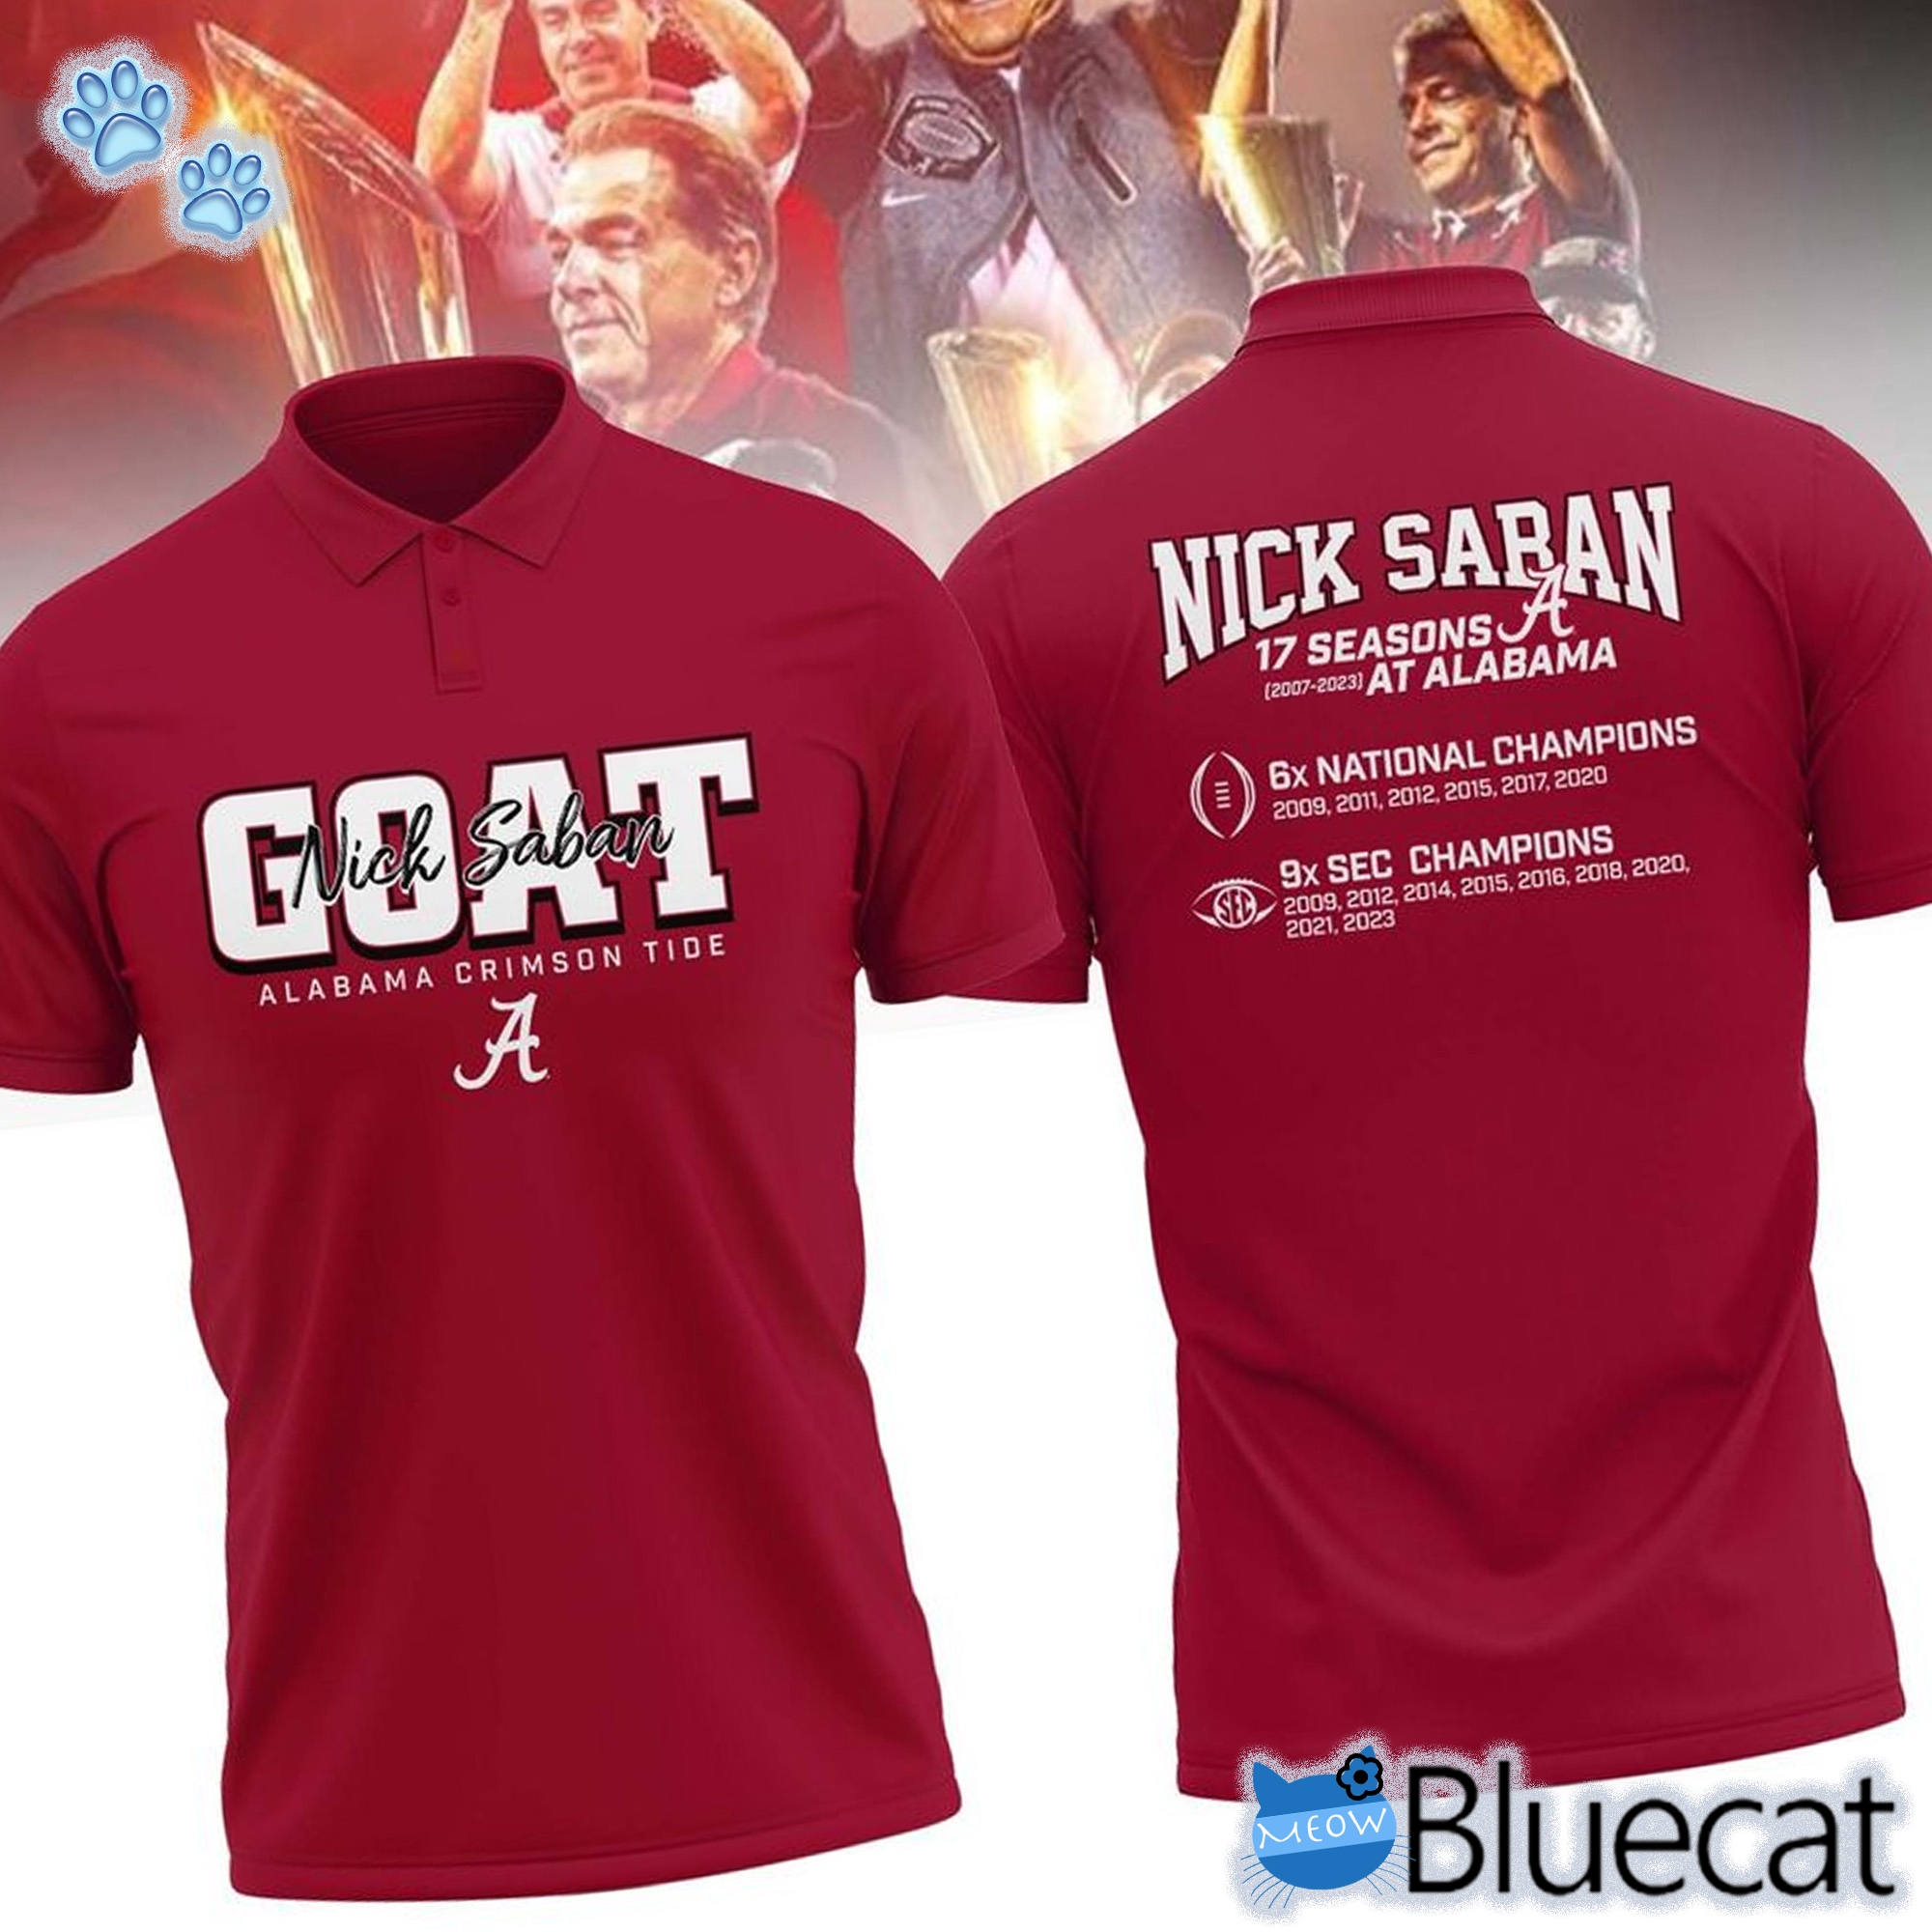 Thank You Nick Saban Coach 17 Seasons At Alabama Polo Shirt 1 Tshirt